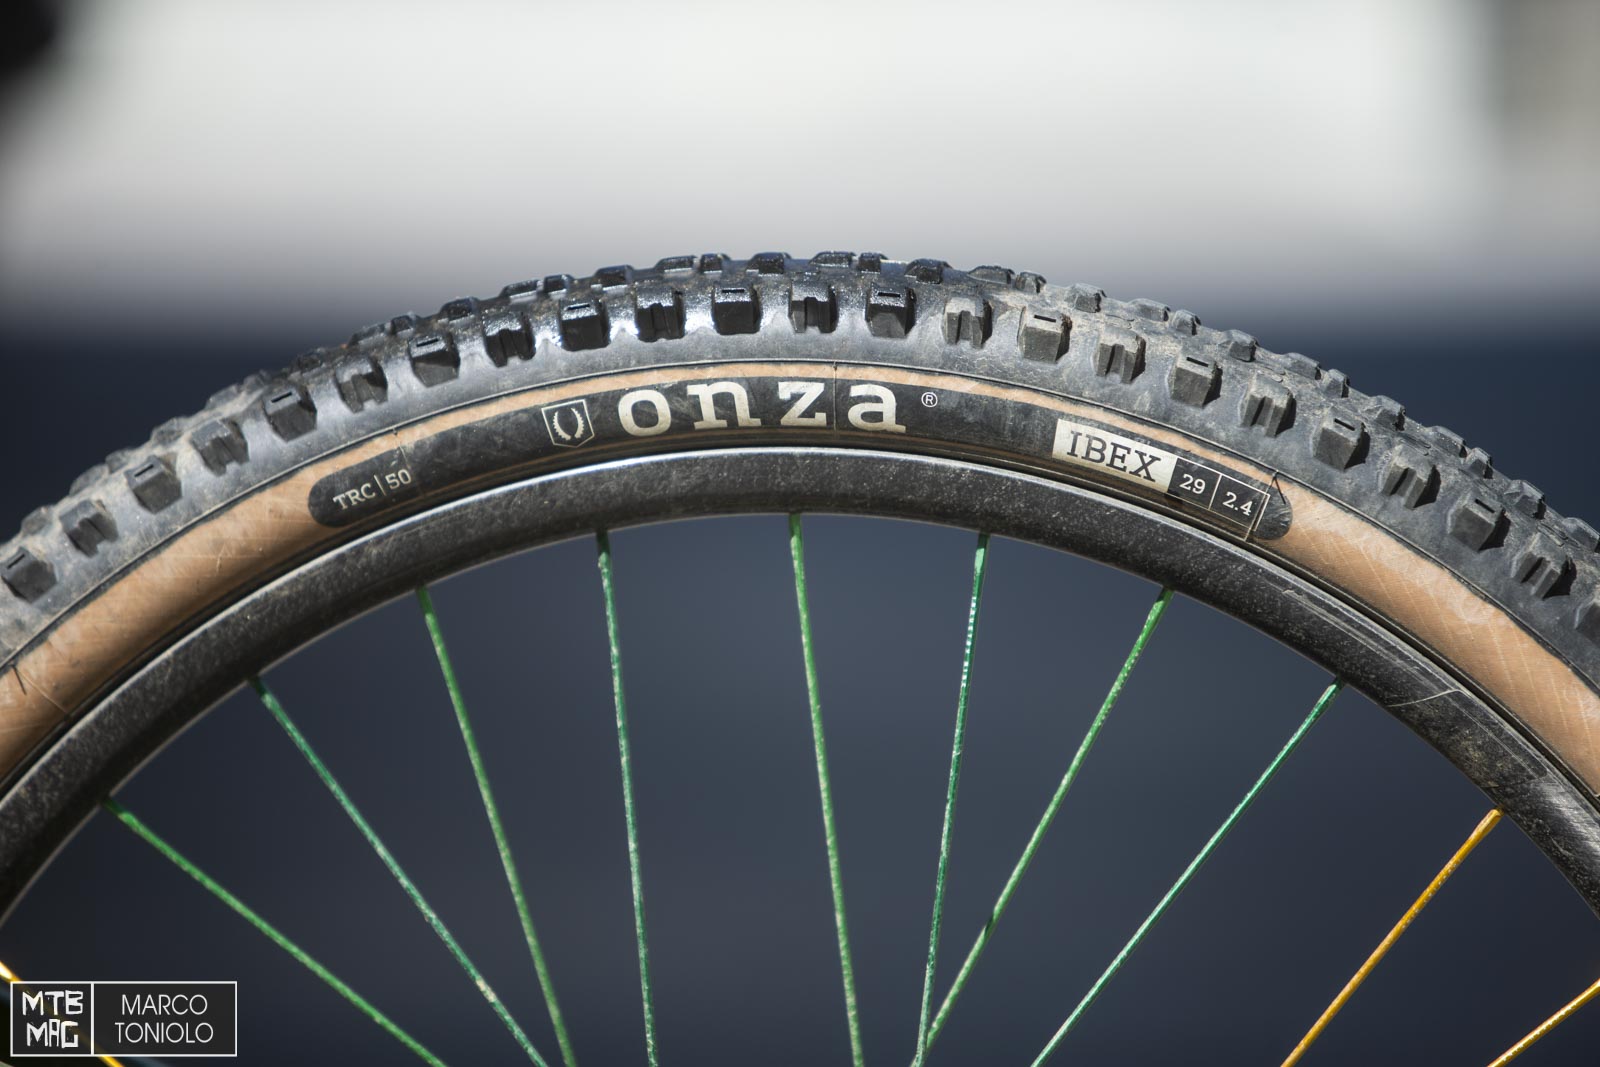 [Prueba] Nuevos Neumáticos Onza Ibex - MTB-MAG.COM - Mountain Bike Online Magazine